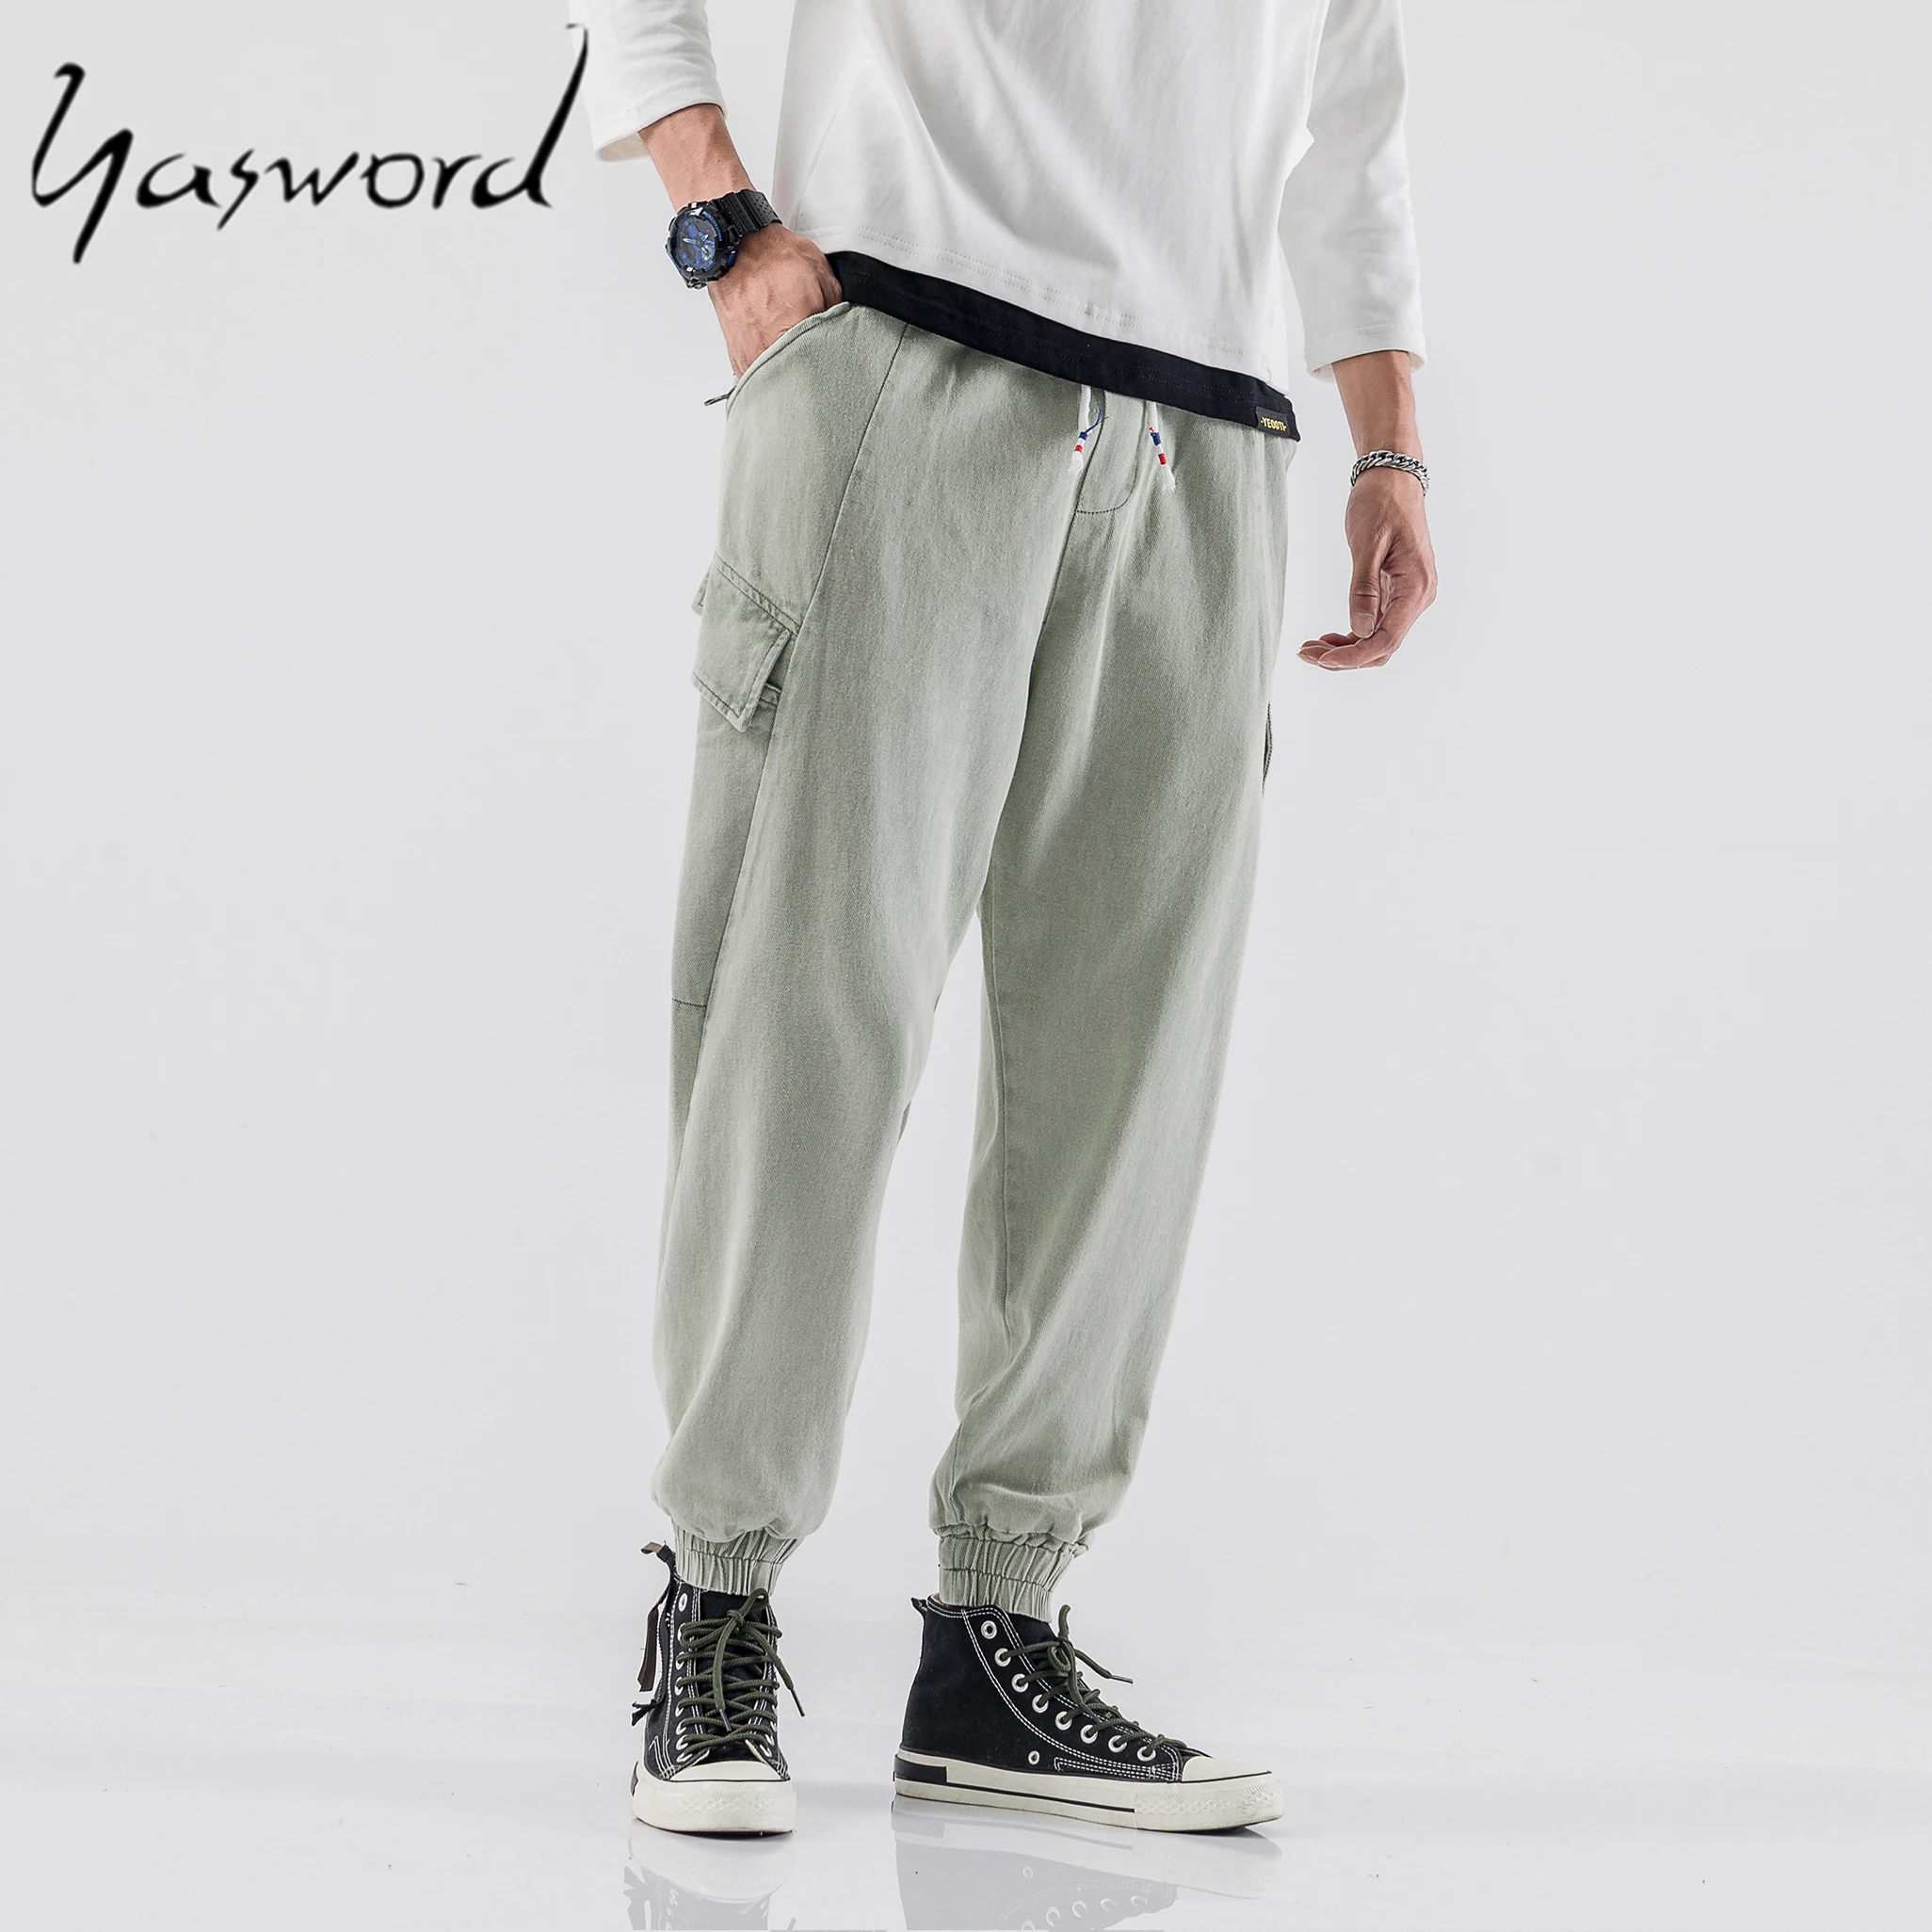 

Yasword Cotton Cargo Pants Men Pockets Patchwork Casual Jogger Fashion Tactical Trousers Harajuku Streetwear Overalls Sweatpants